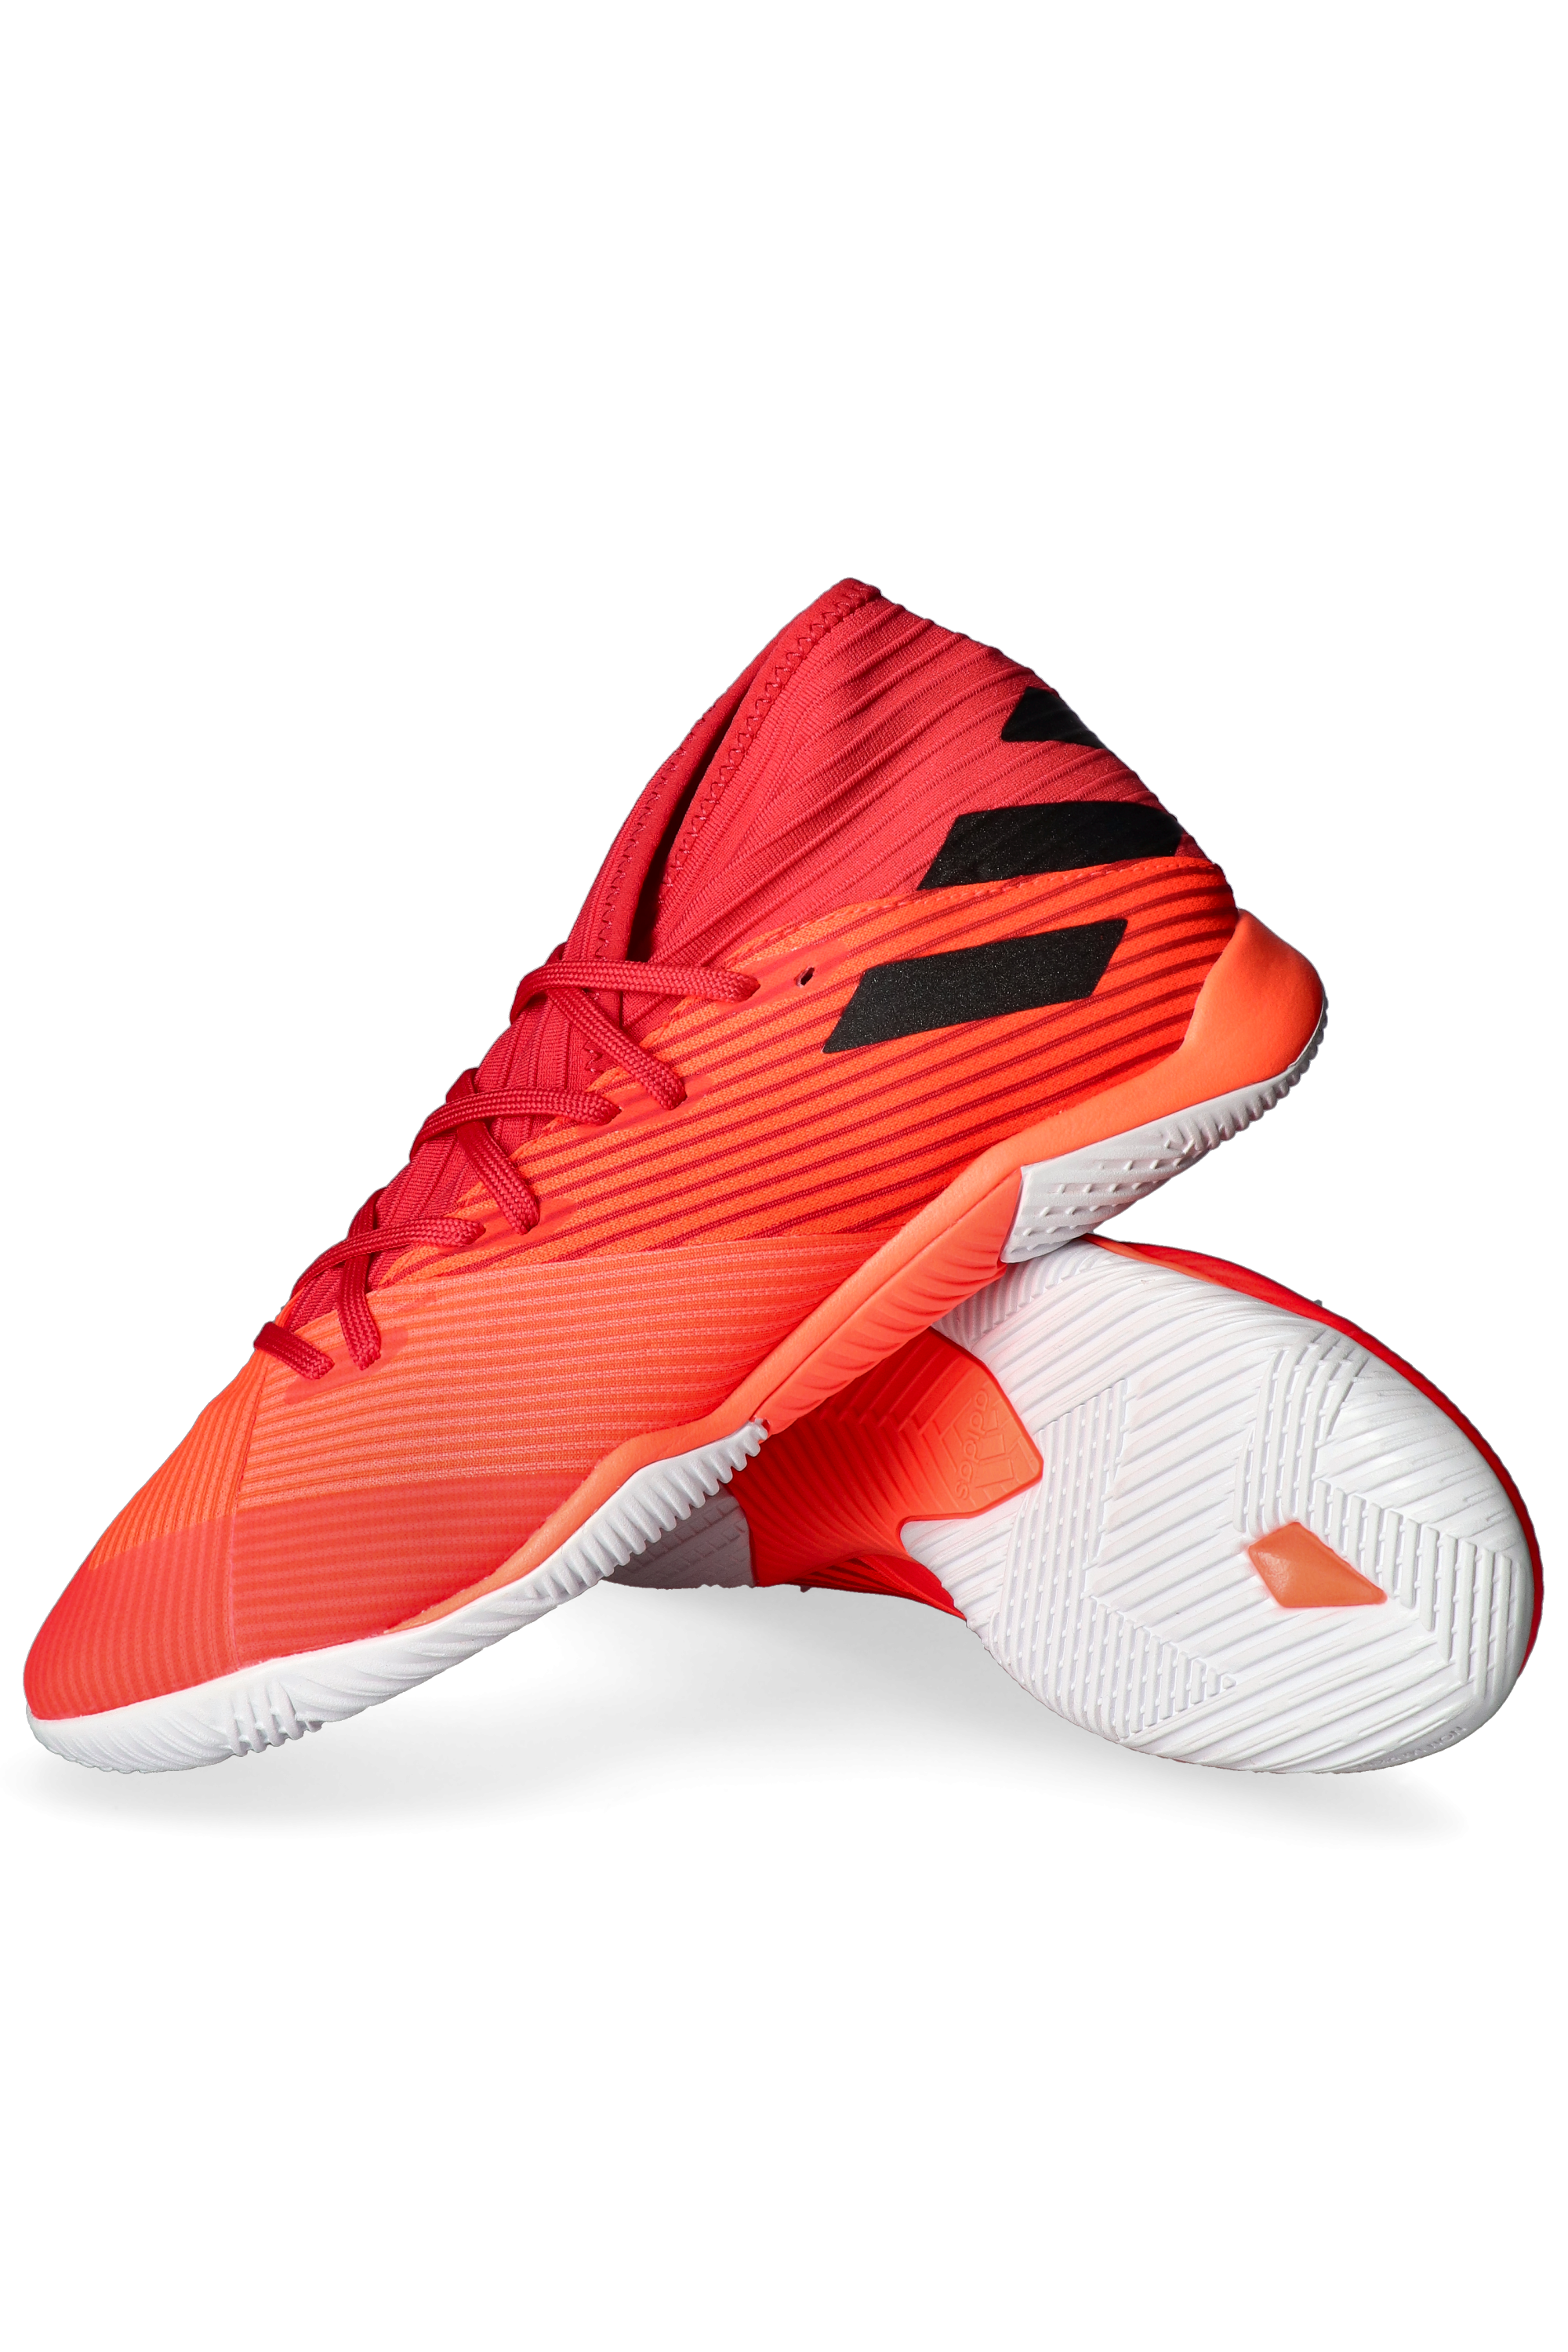 adidas Nemeziz 19.3 IN | R-GOL.com - Football boots \u0026 equipment